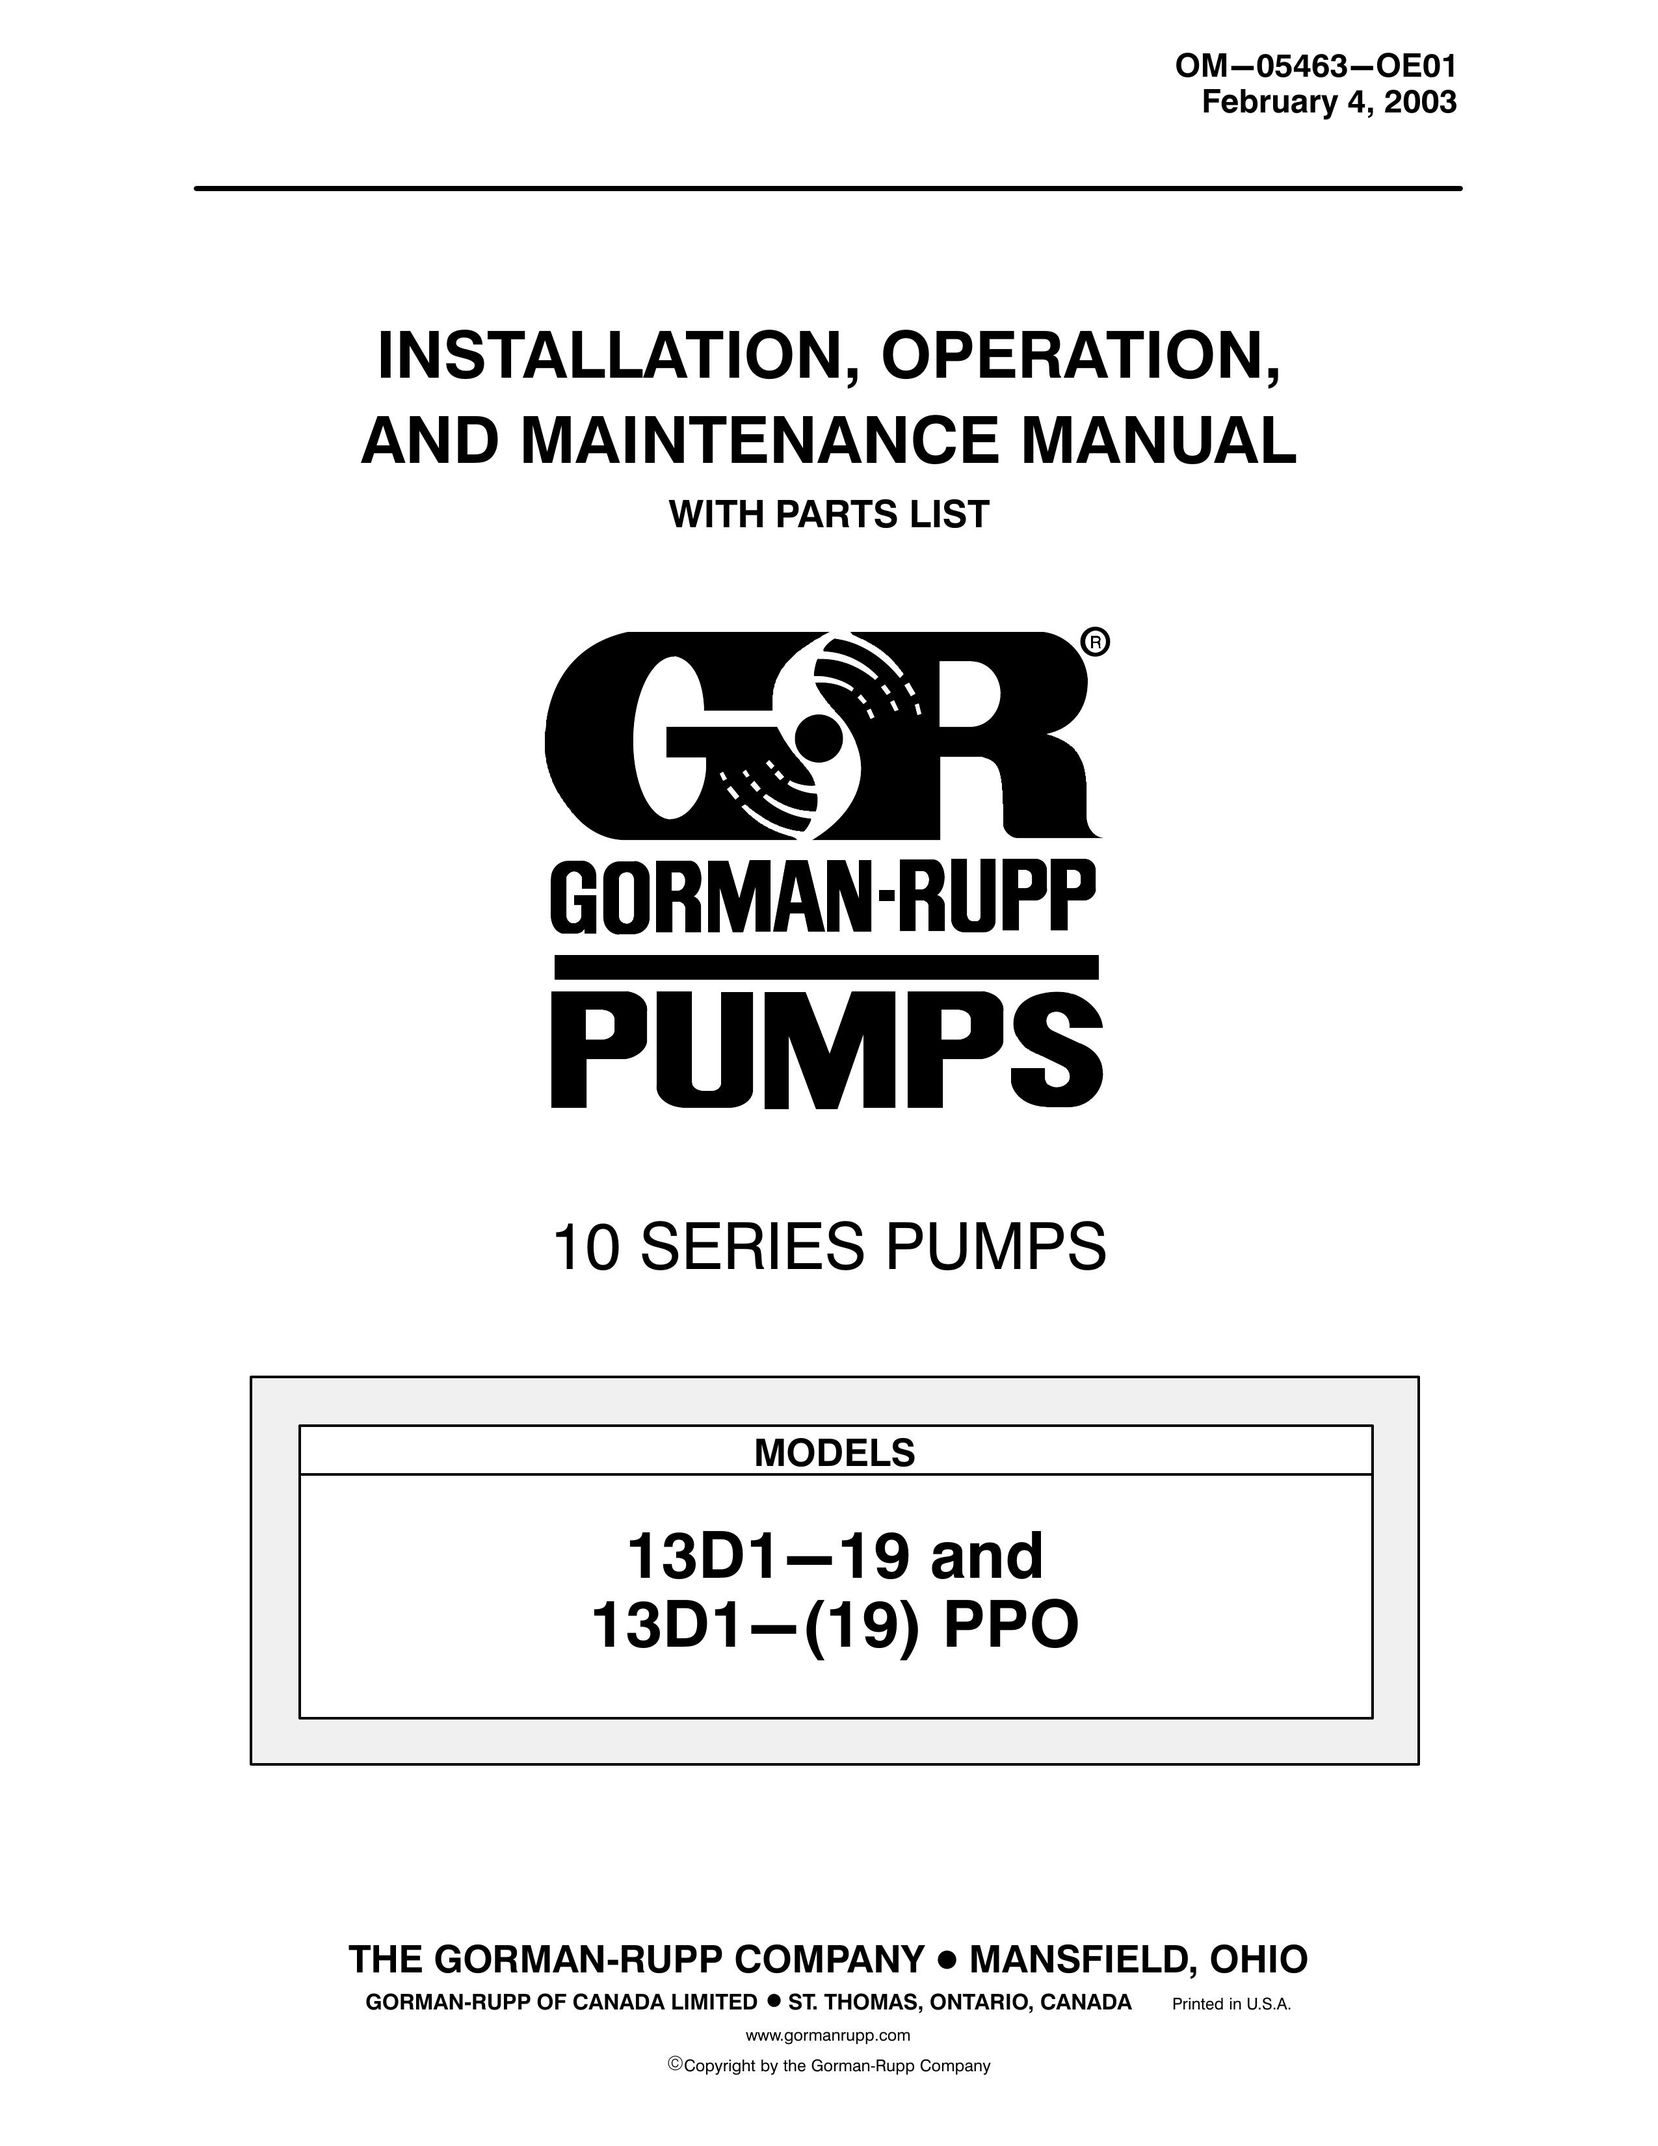 Briggs & Stratton 13D1-19 Heat Pump User Manual